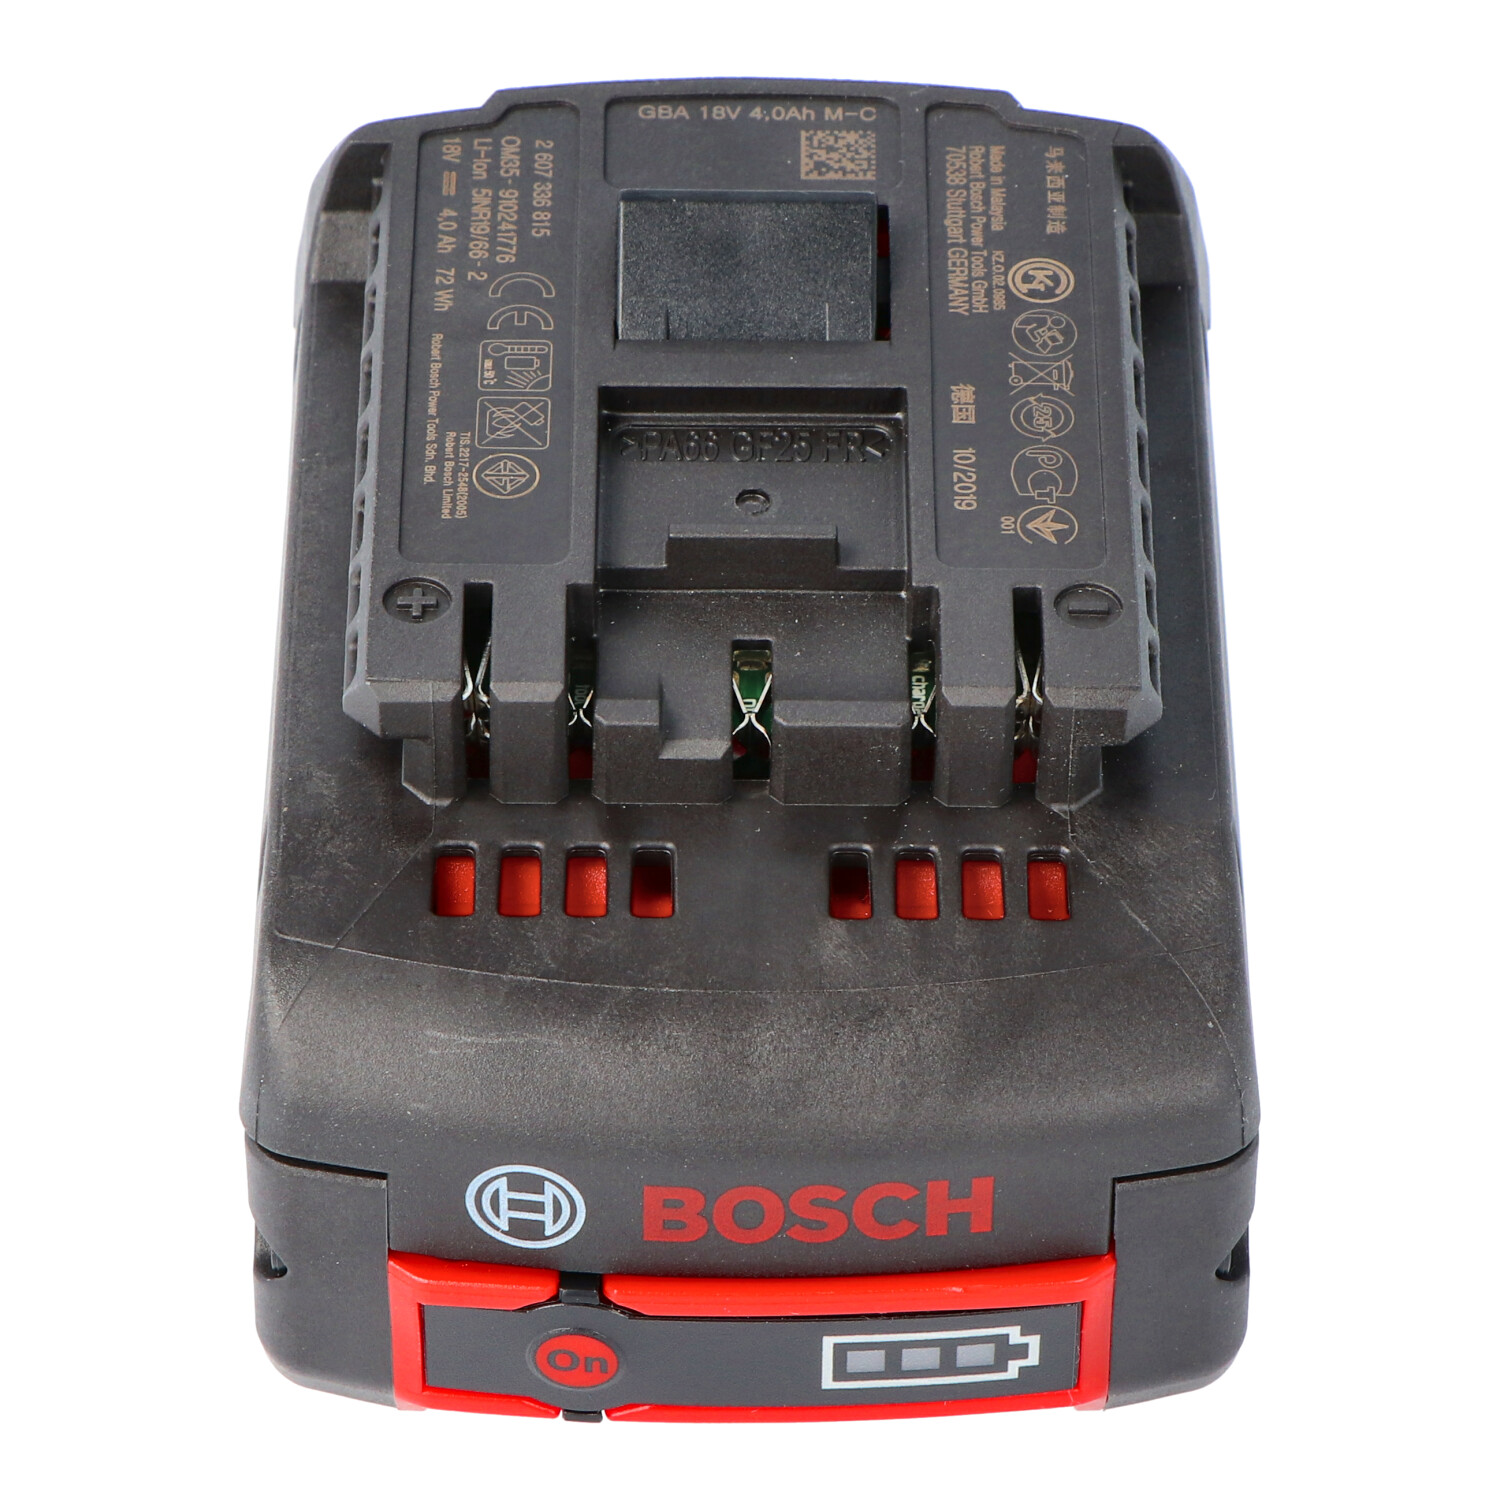 4000mAh Original Bosch GSR 18 V-LI Akku 2607336815 mit 18 Volt und 4Ah